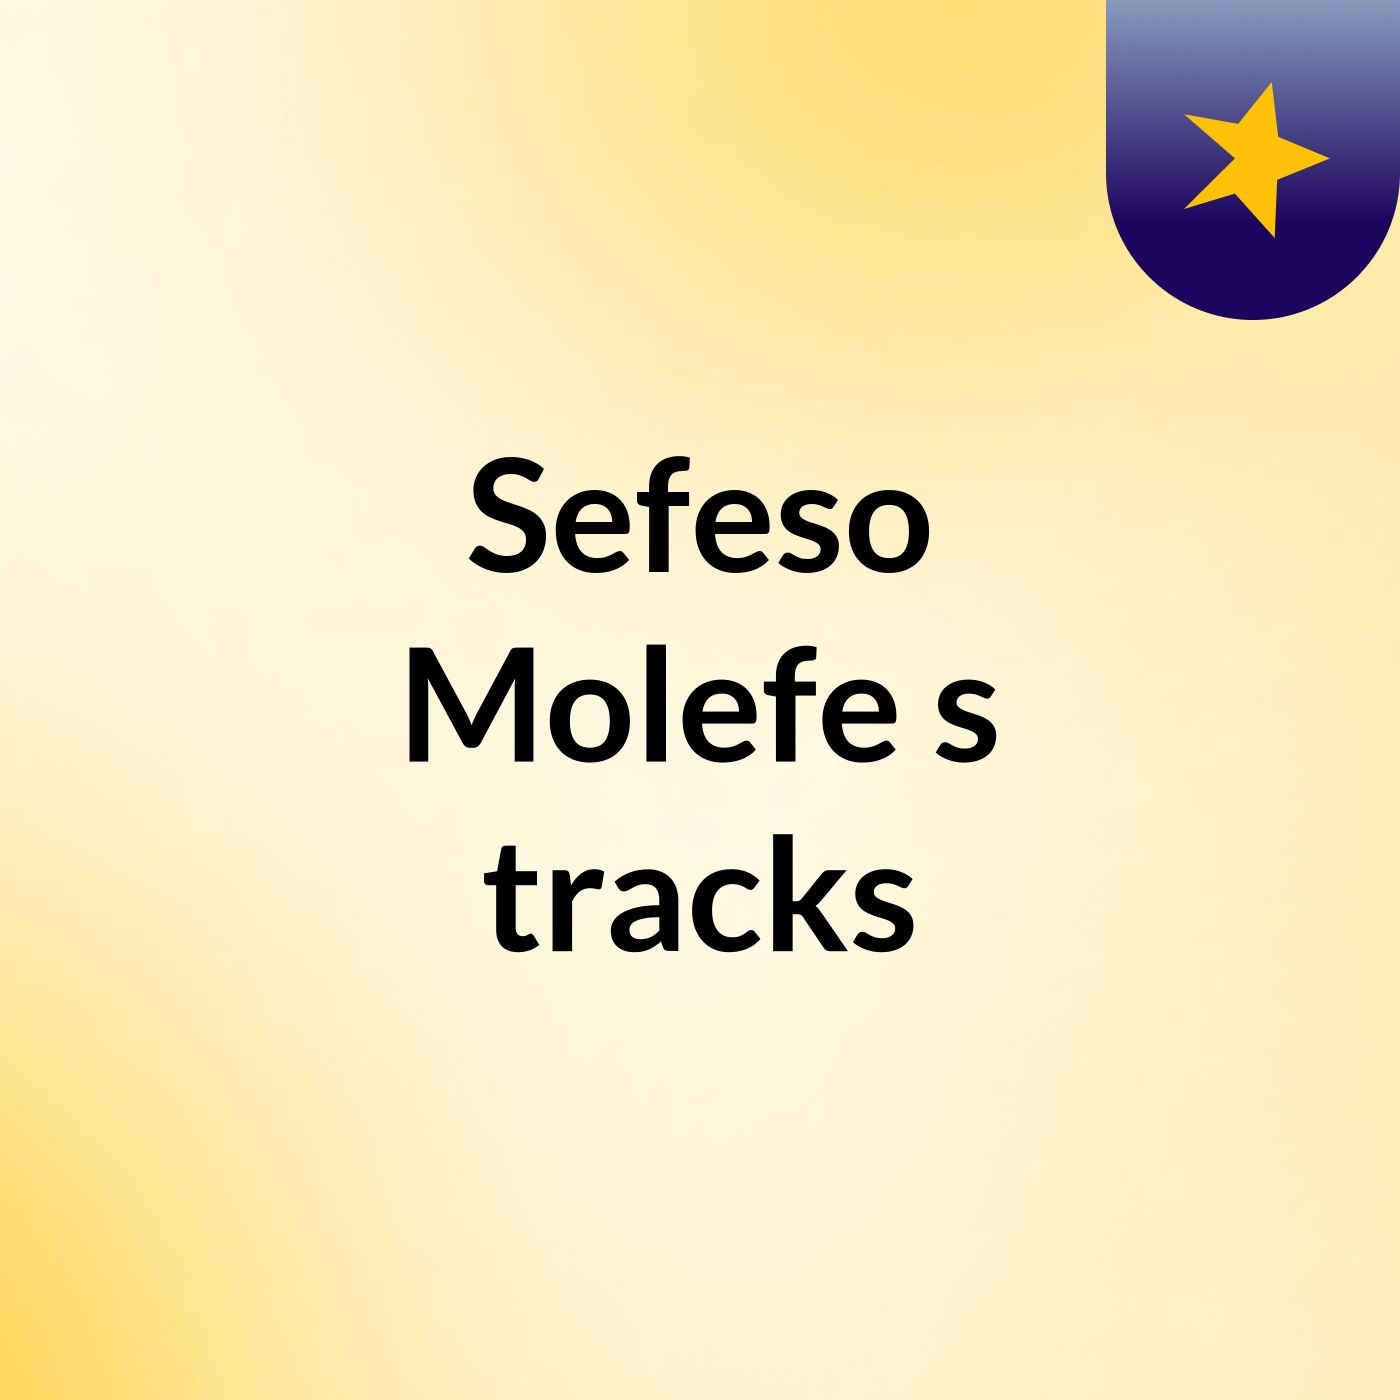 Episode 18 - Sefeso Molefe's tracks